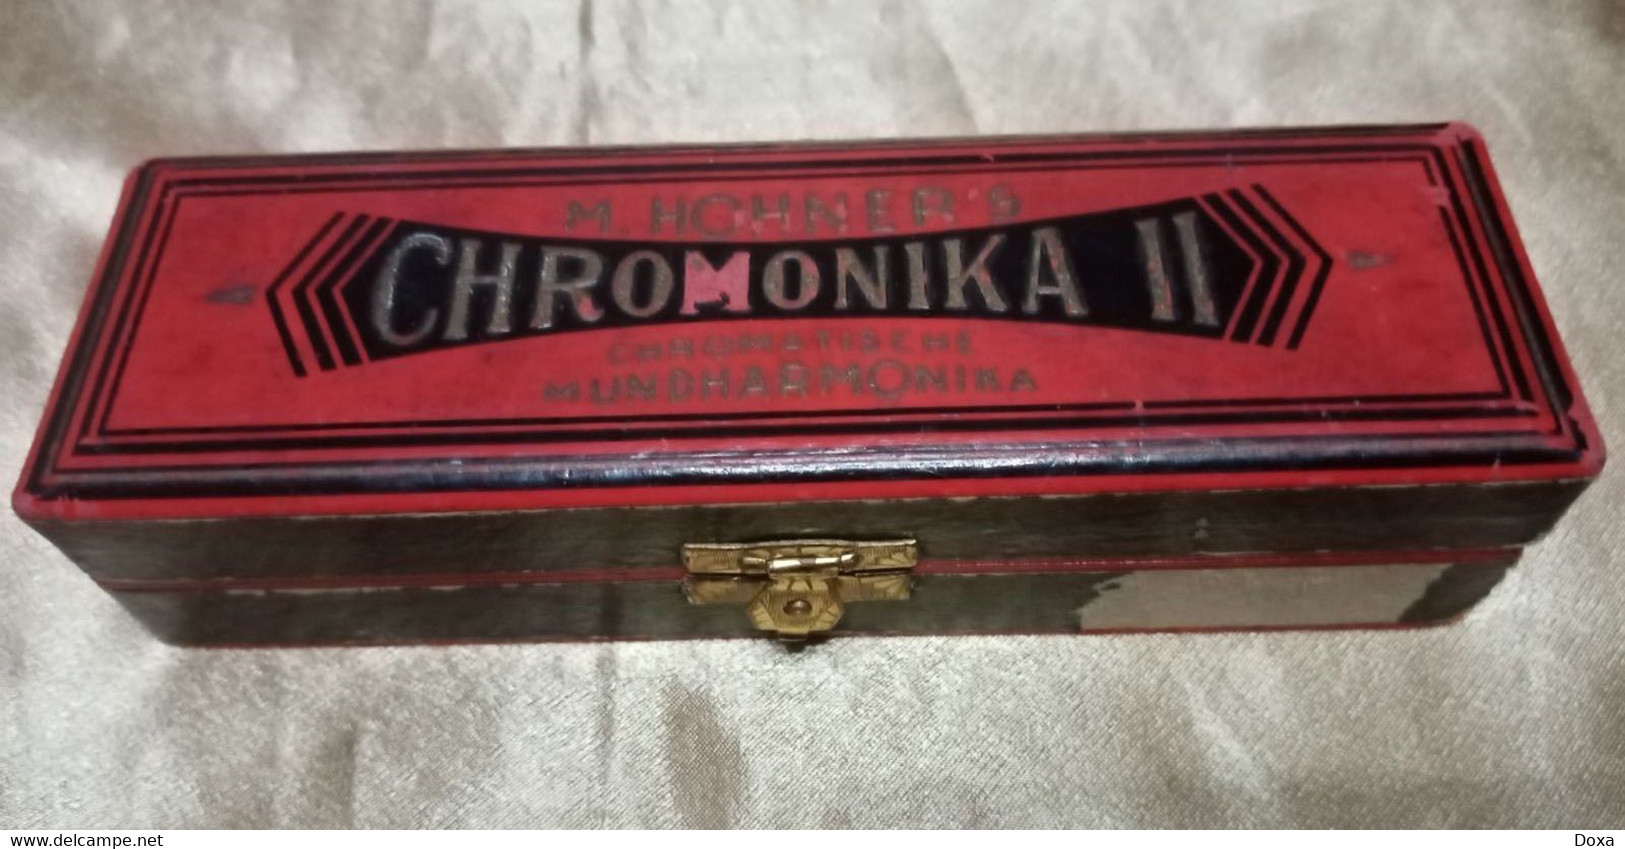 Harmonica Chromonica II Mundharmonika - Instruments De Musique